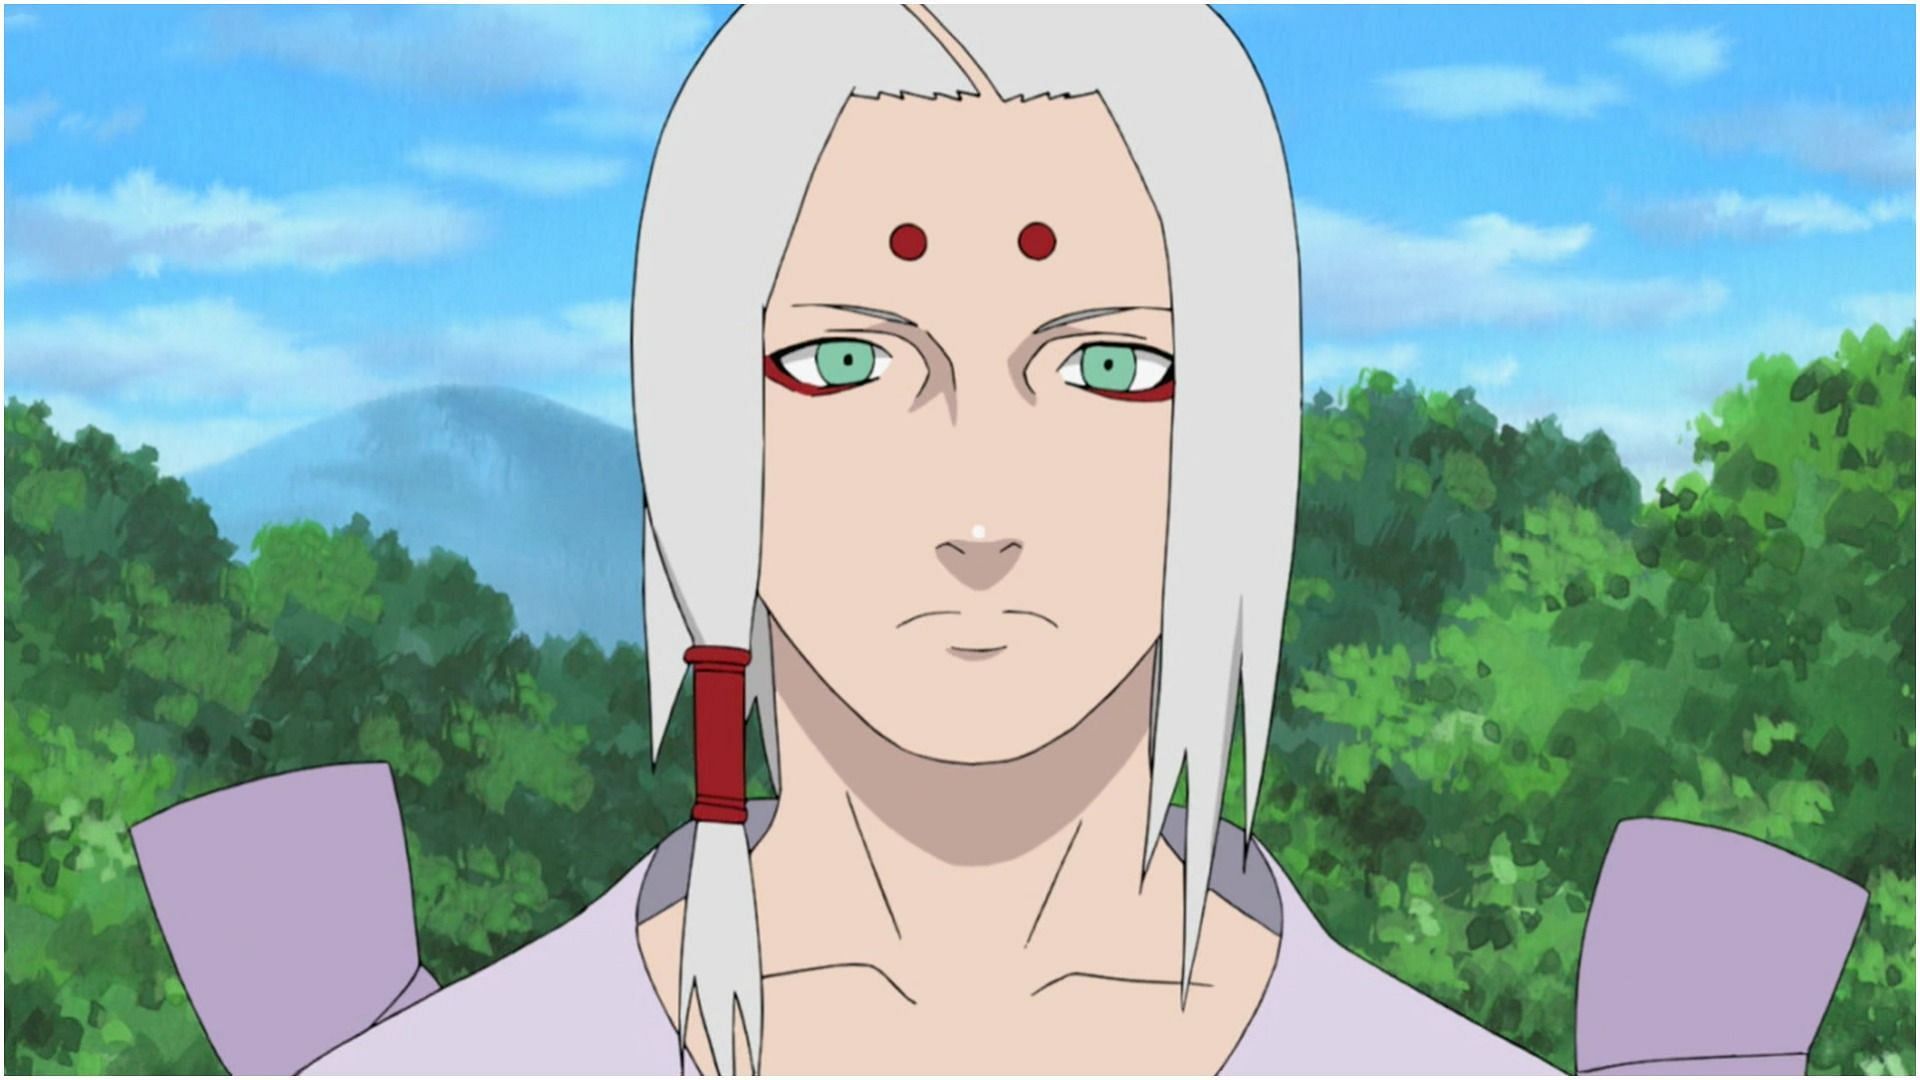 Kimimaro as seen in Naruto (Image via Studio Pierrot)